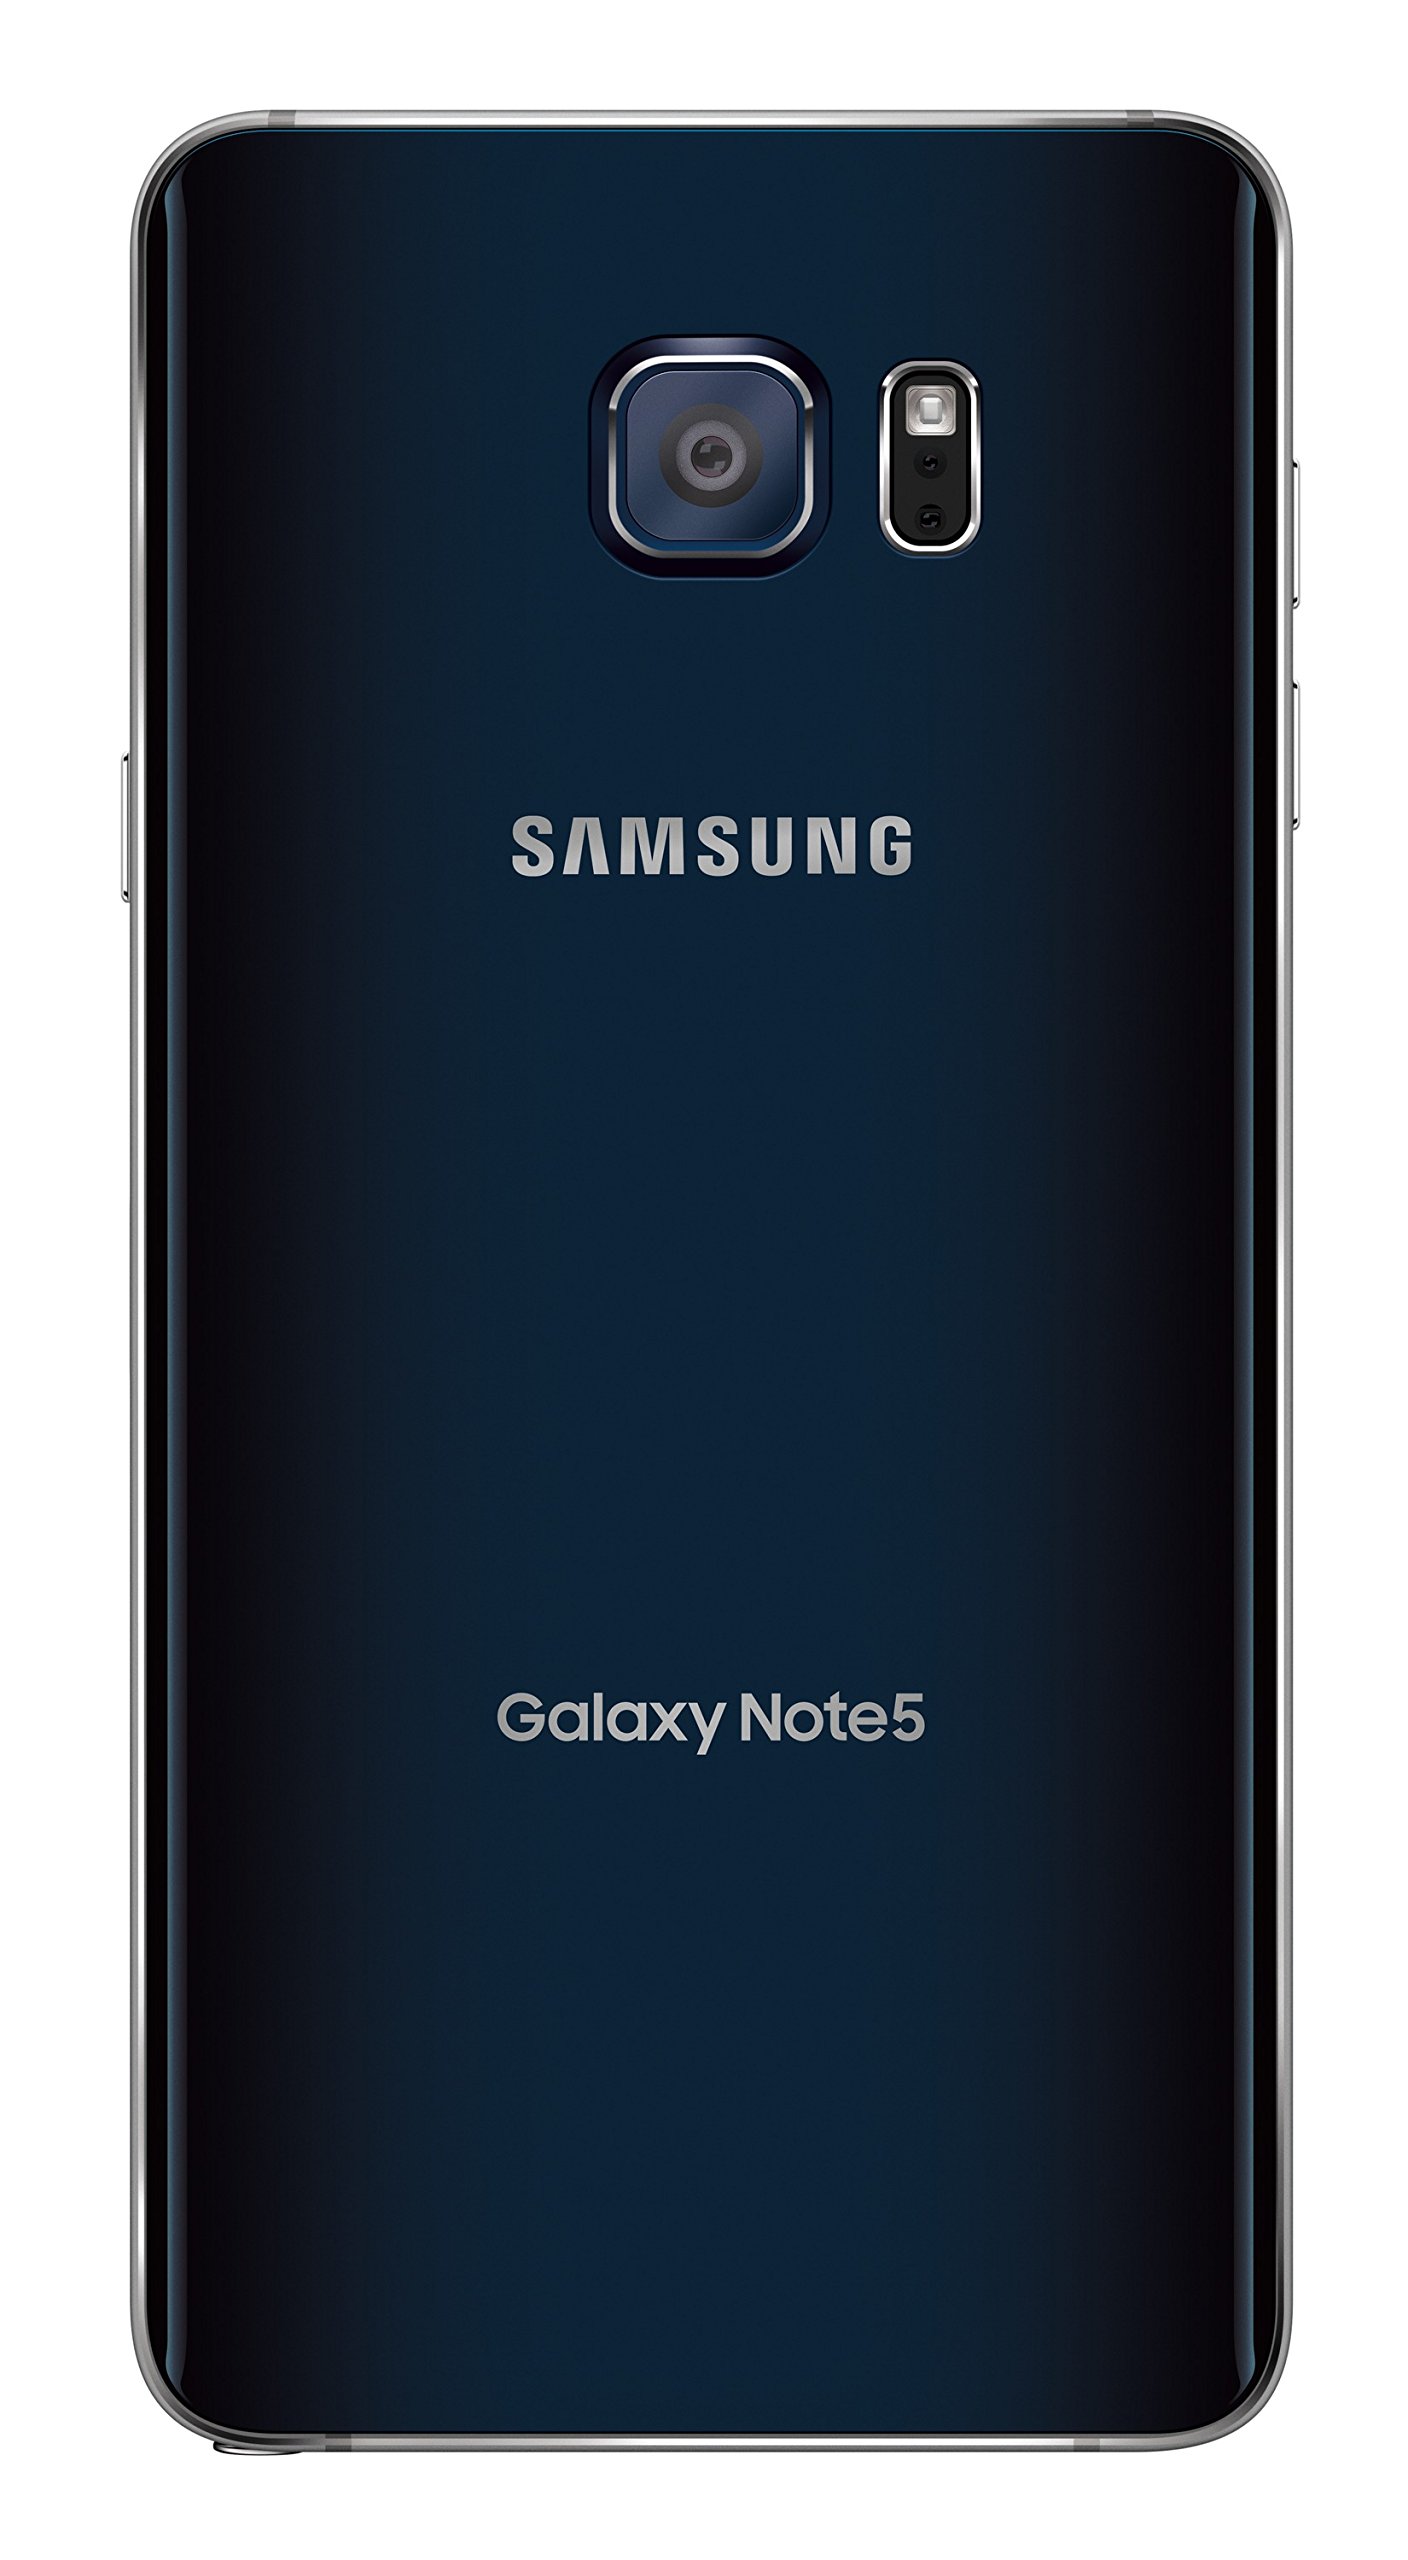 SAMSUNG Galaxy Note 5, Black  32GB (Verizon Wireless)